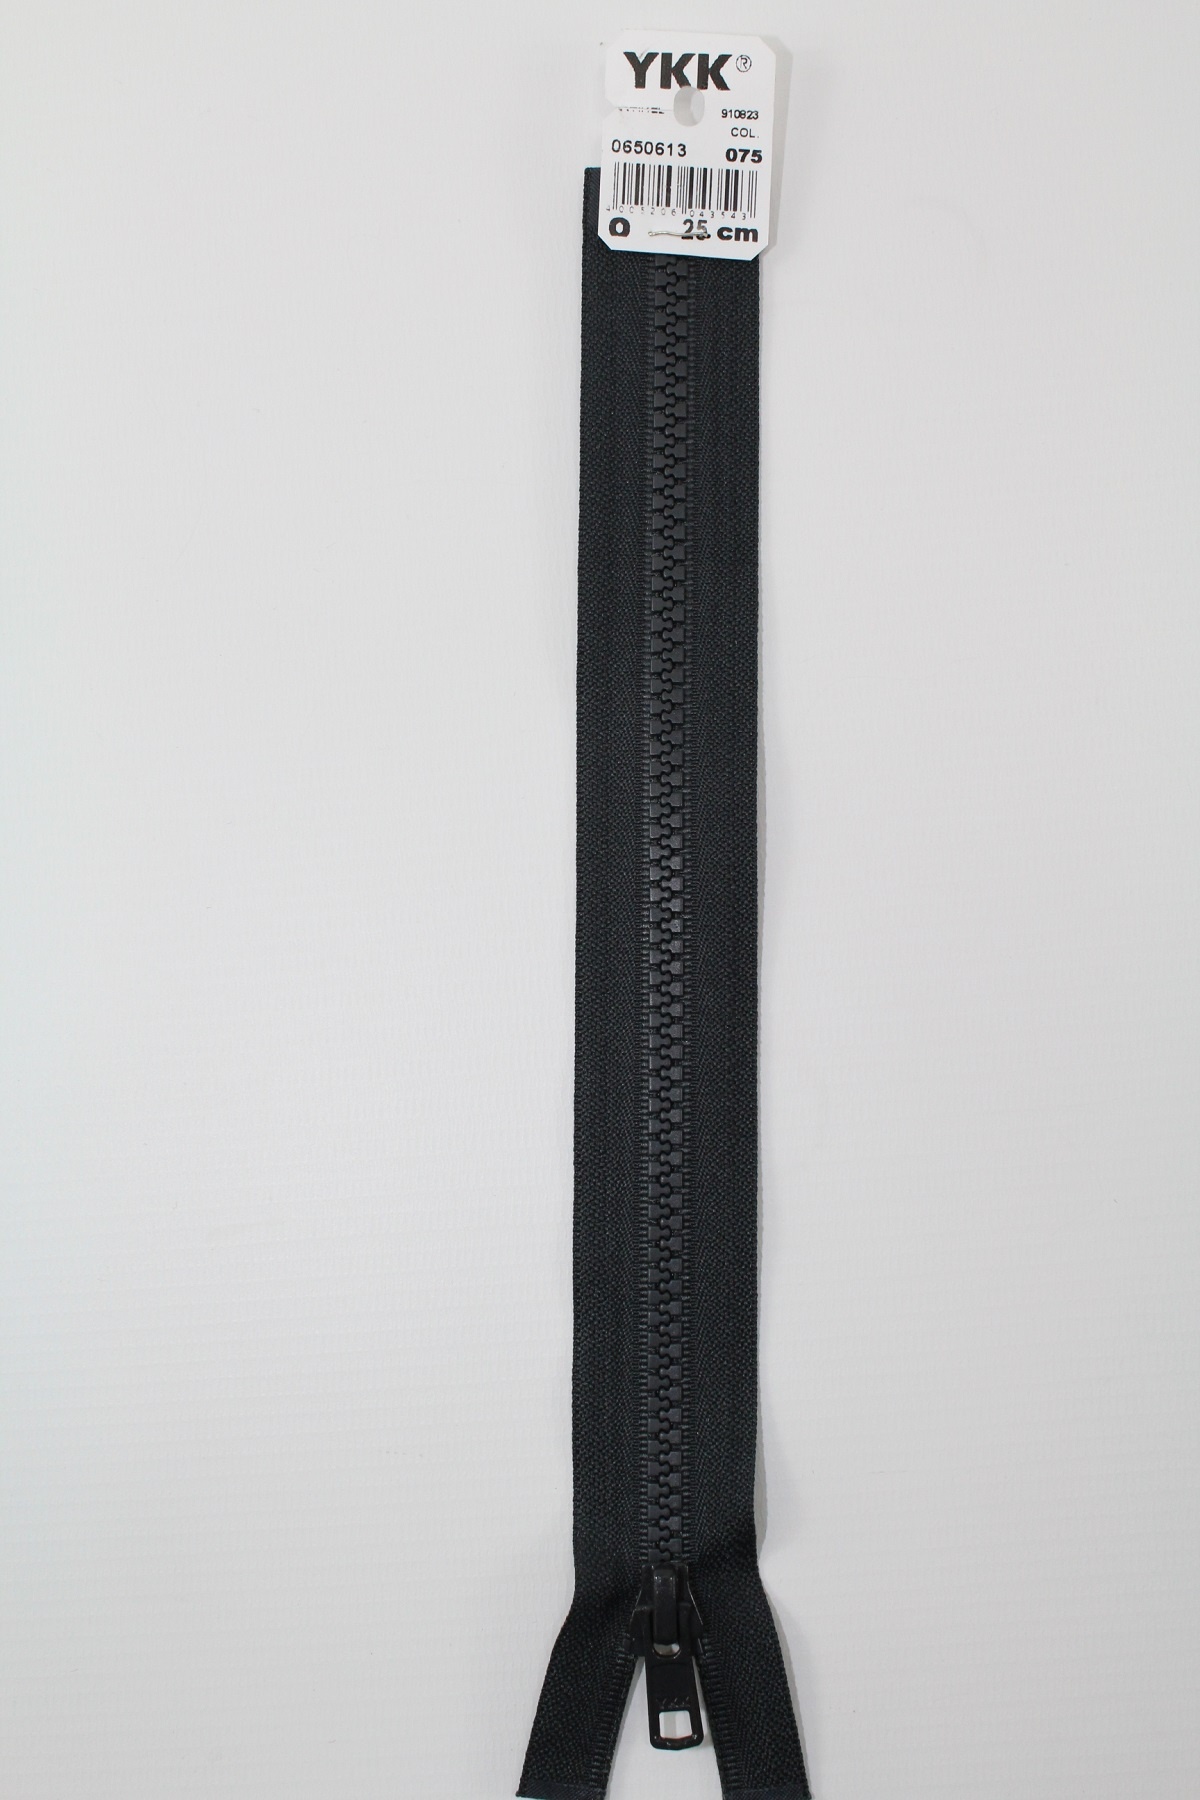 YKK - Reissverschlüsse 25 cm - 80 cm, teilbar, kohle